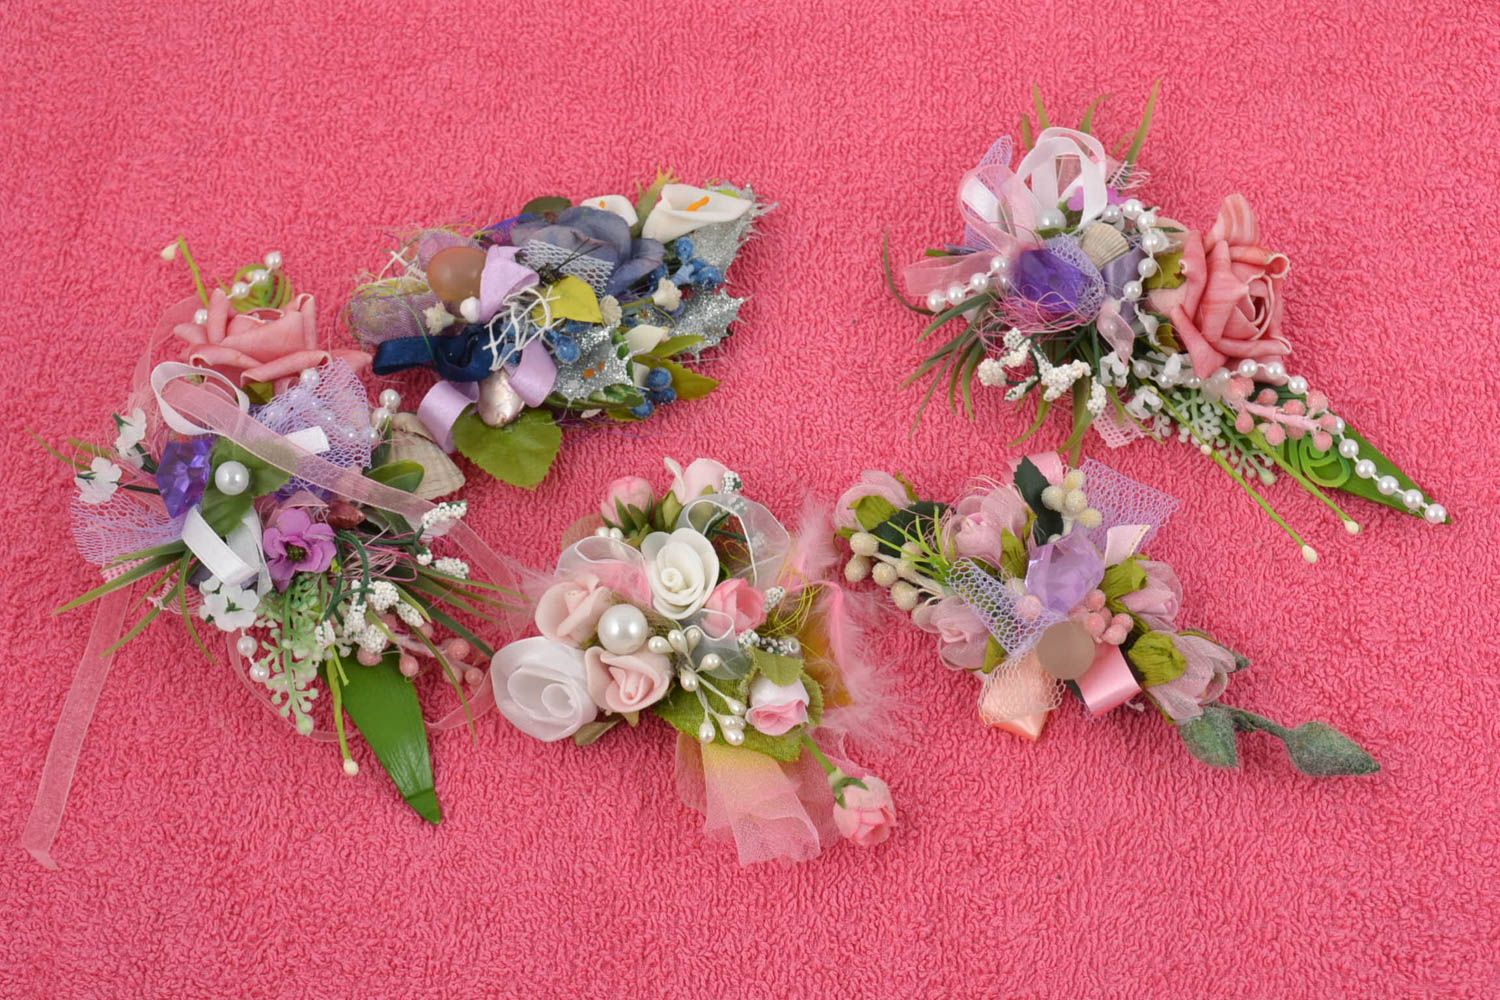 Handmade brooch designer boutonniere designer wedding accessories set of 5 items photo 1